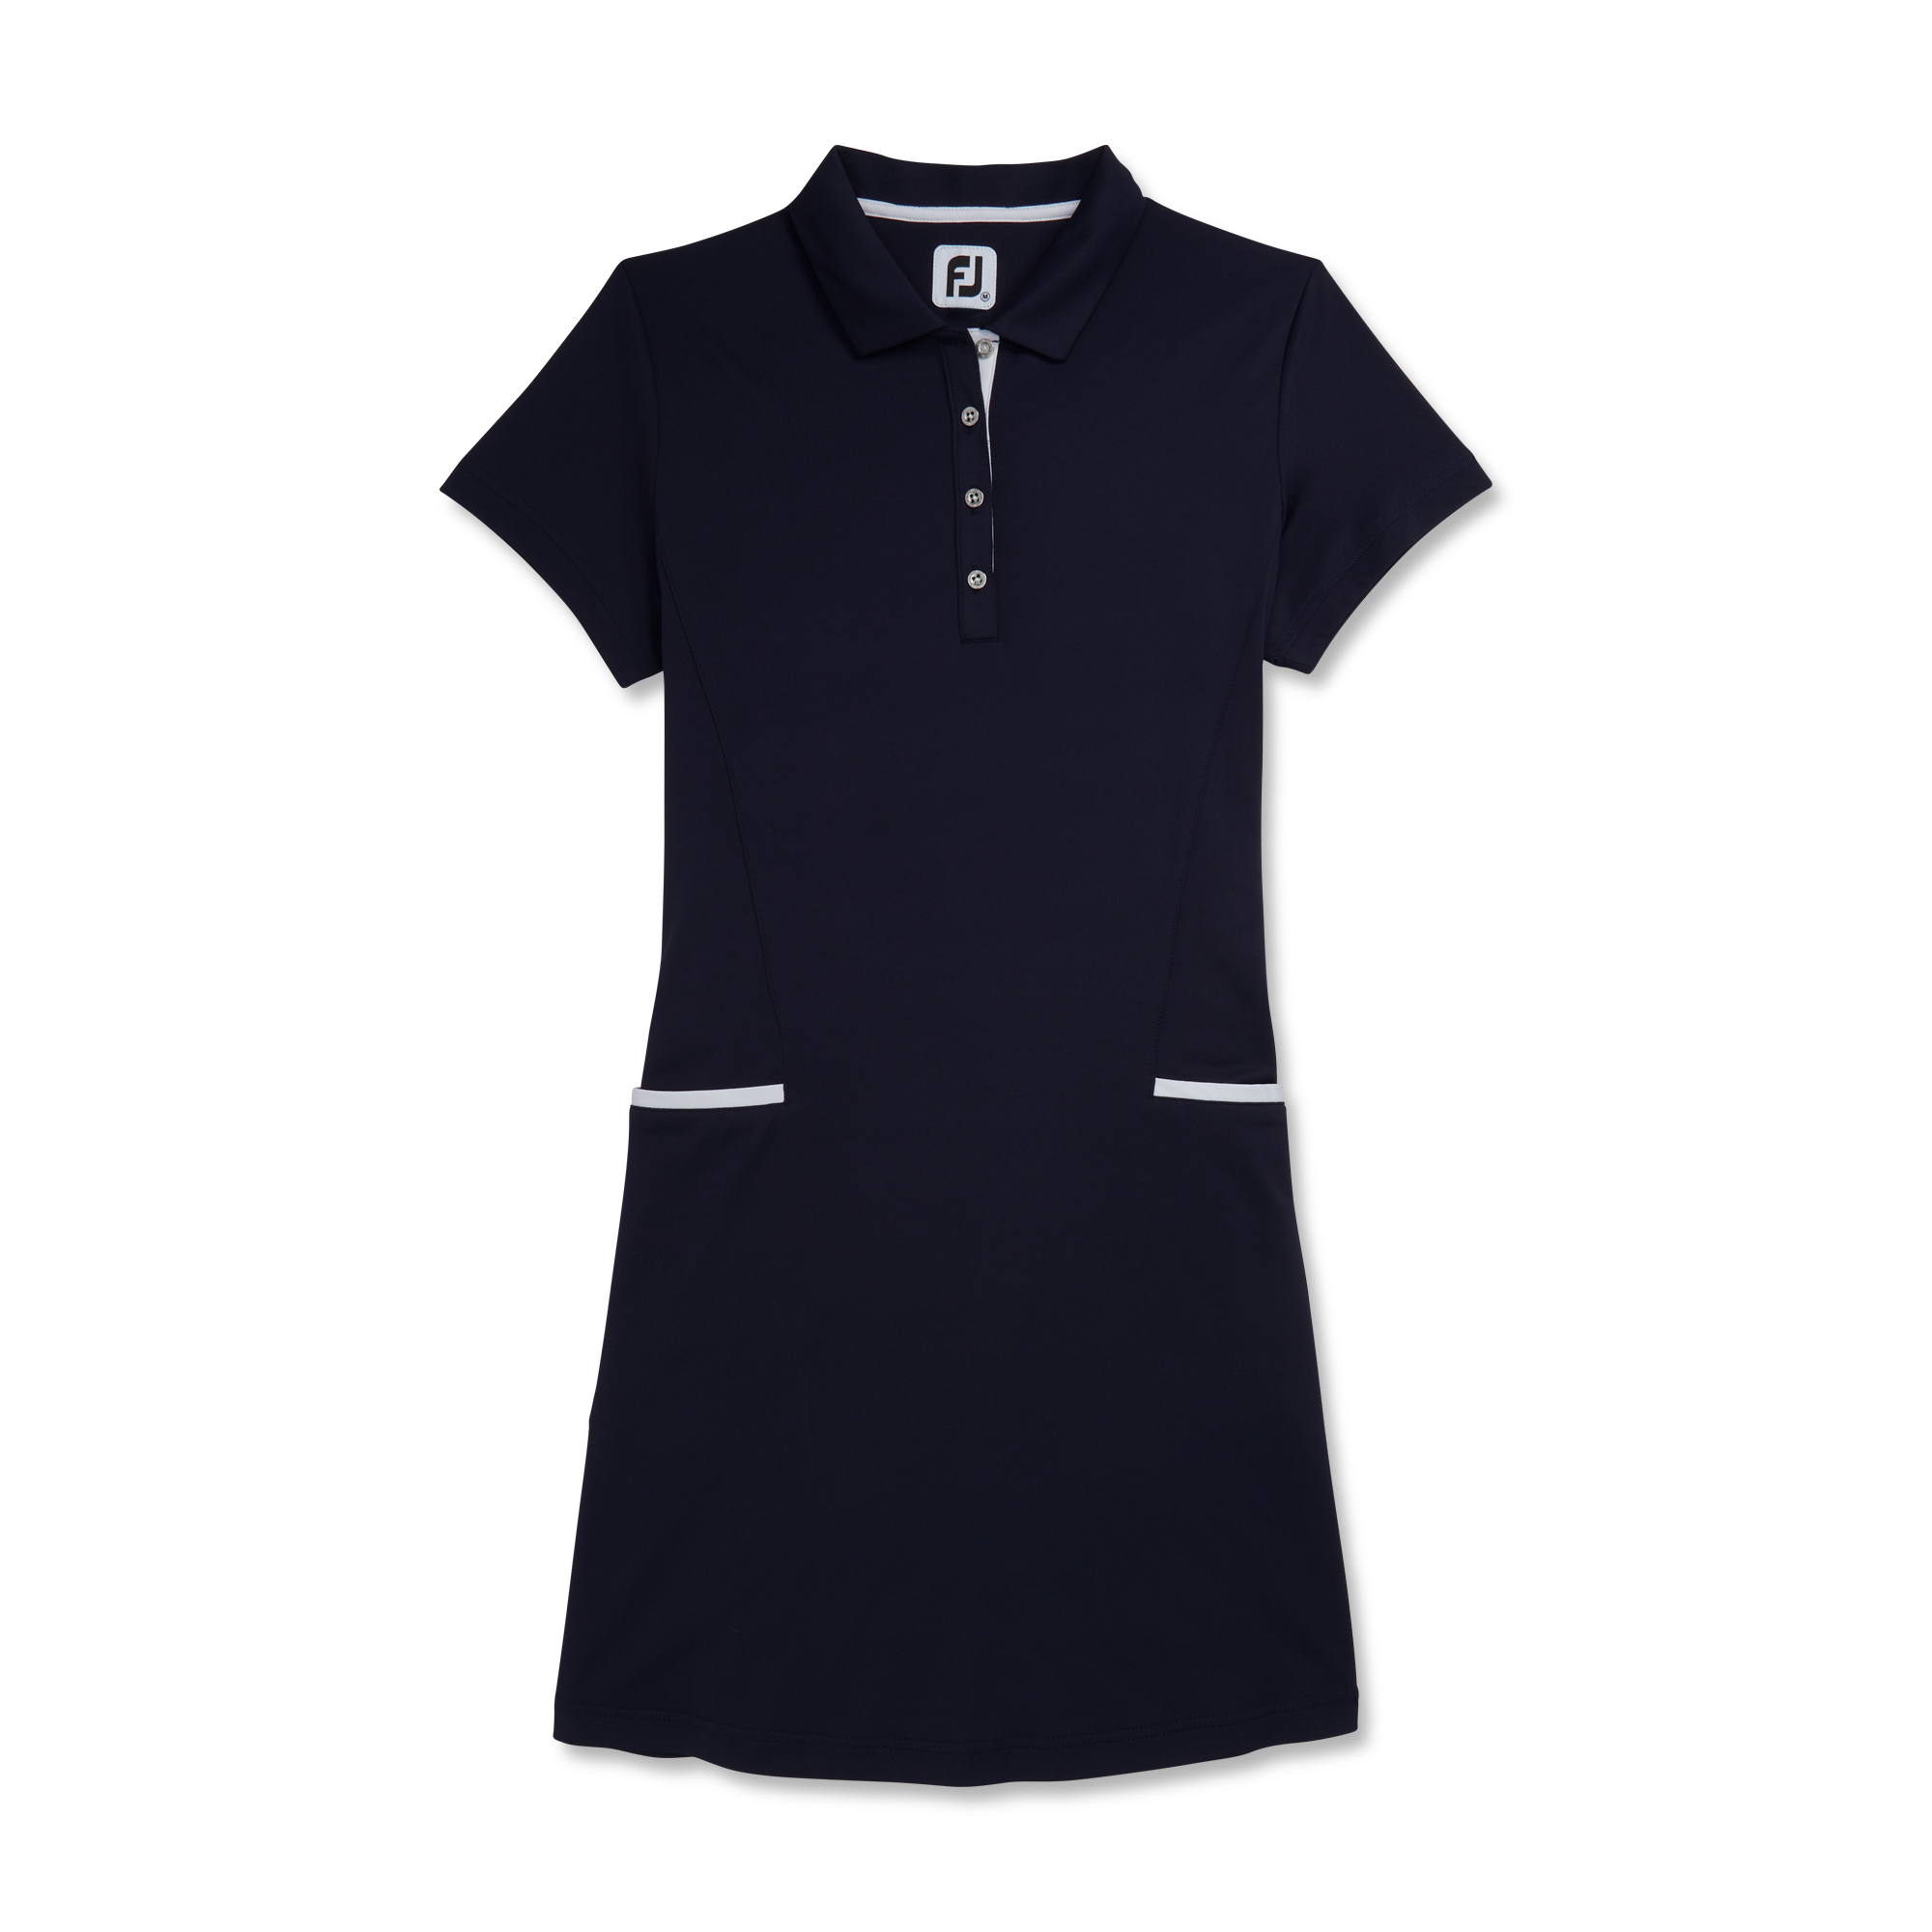 FJ Women's Golf Dress